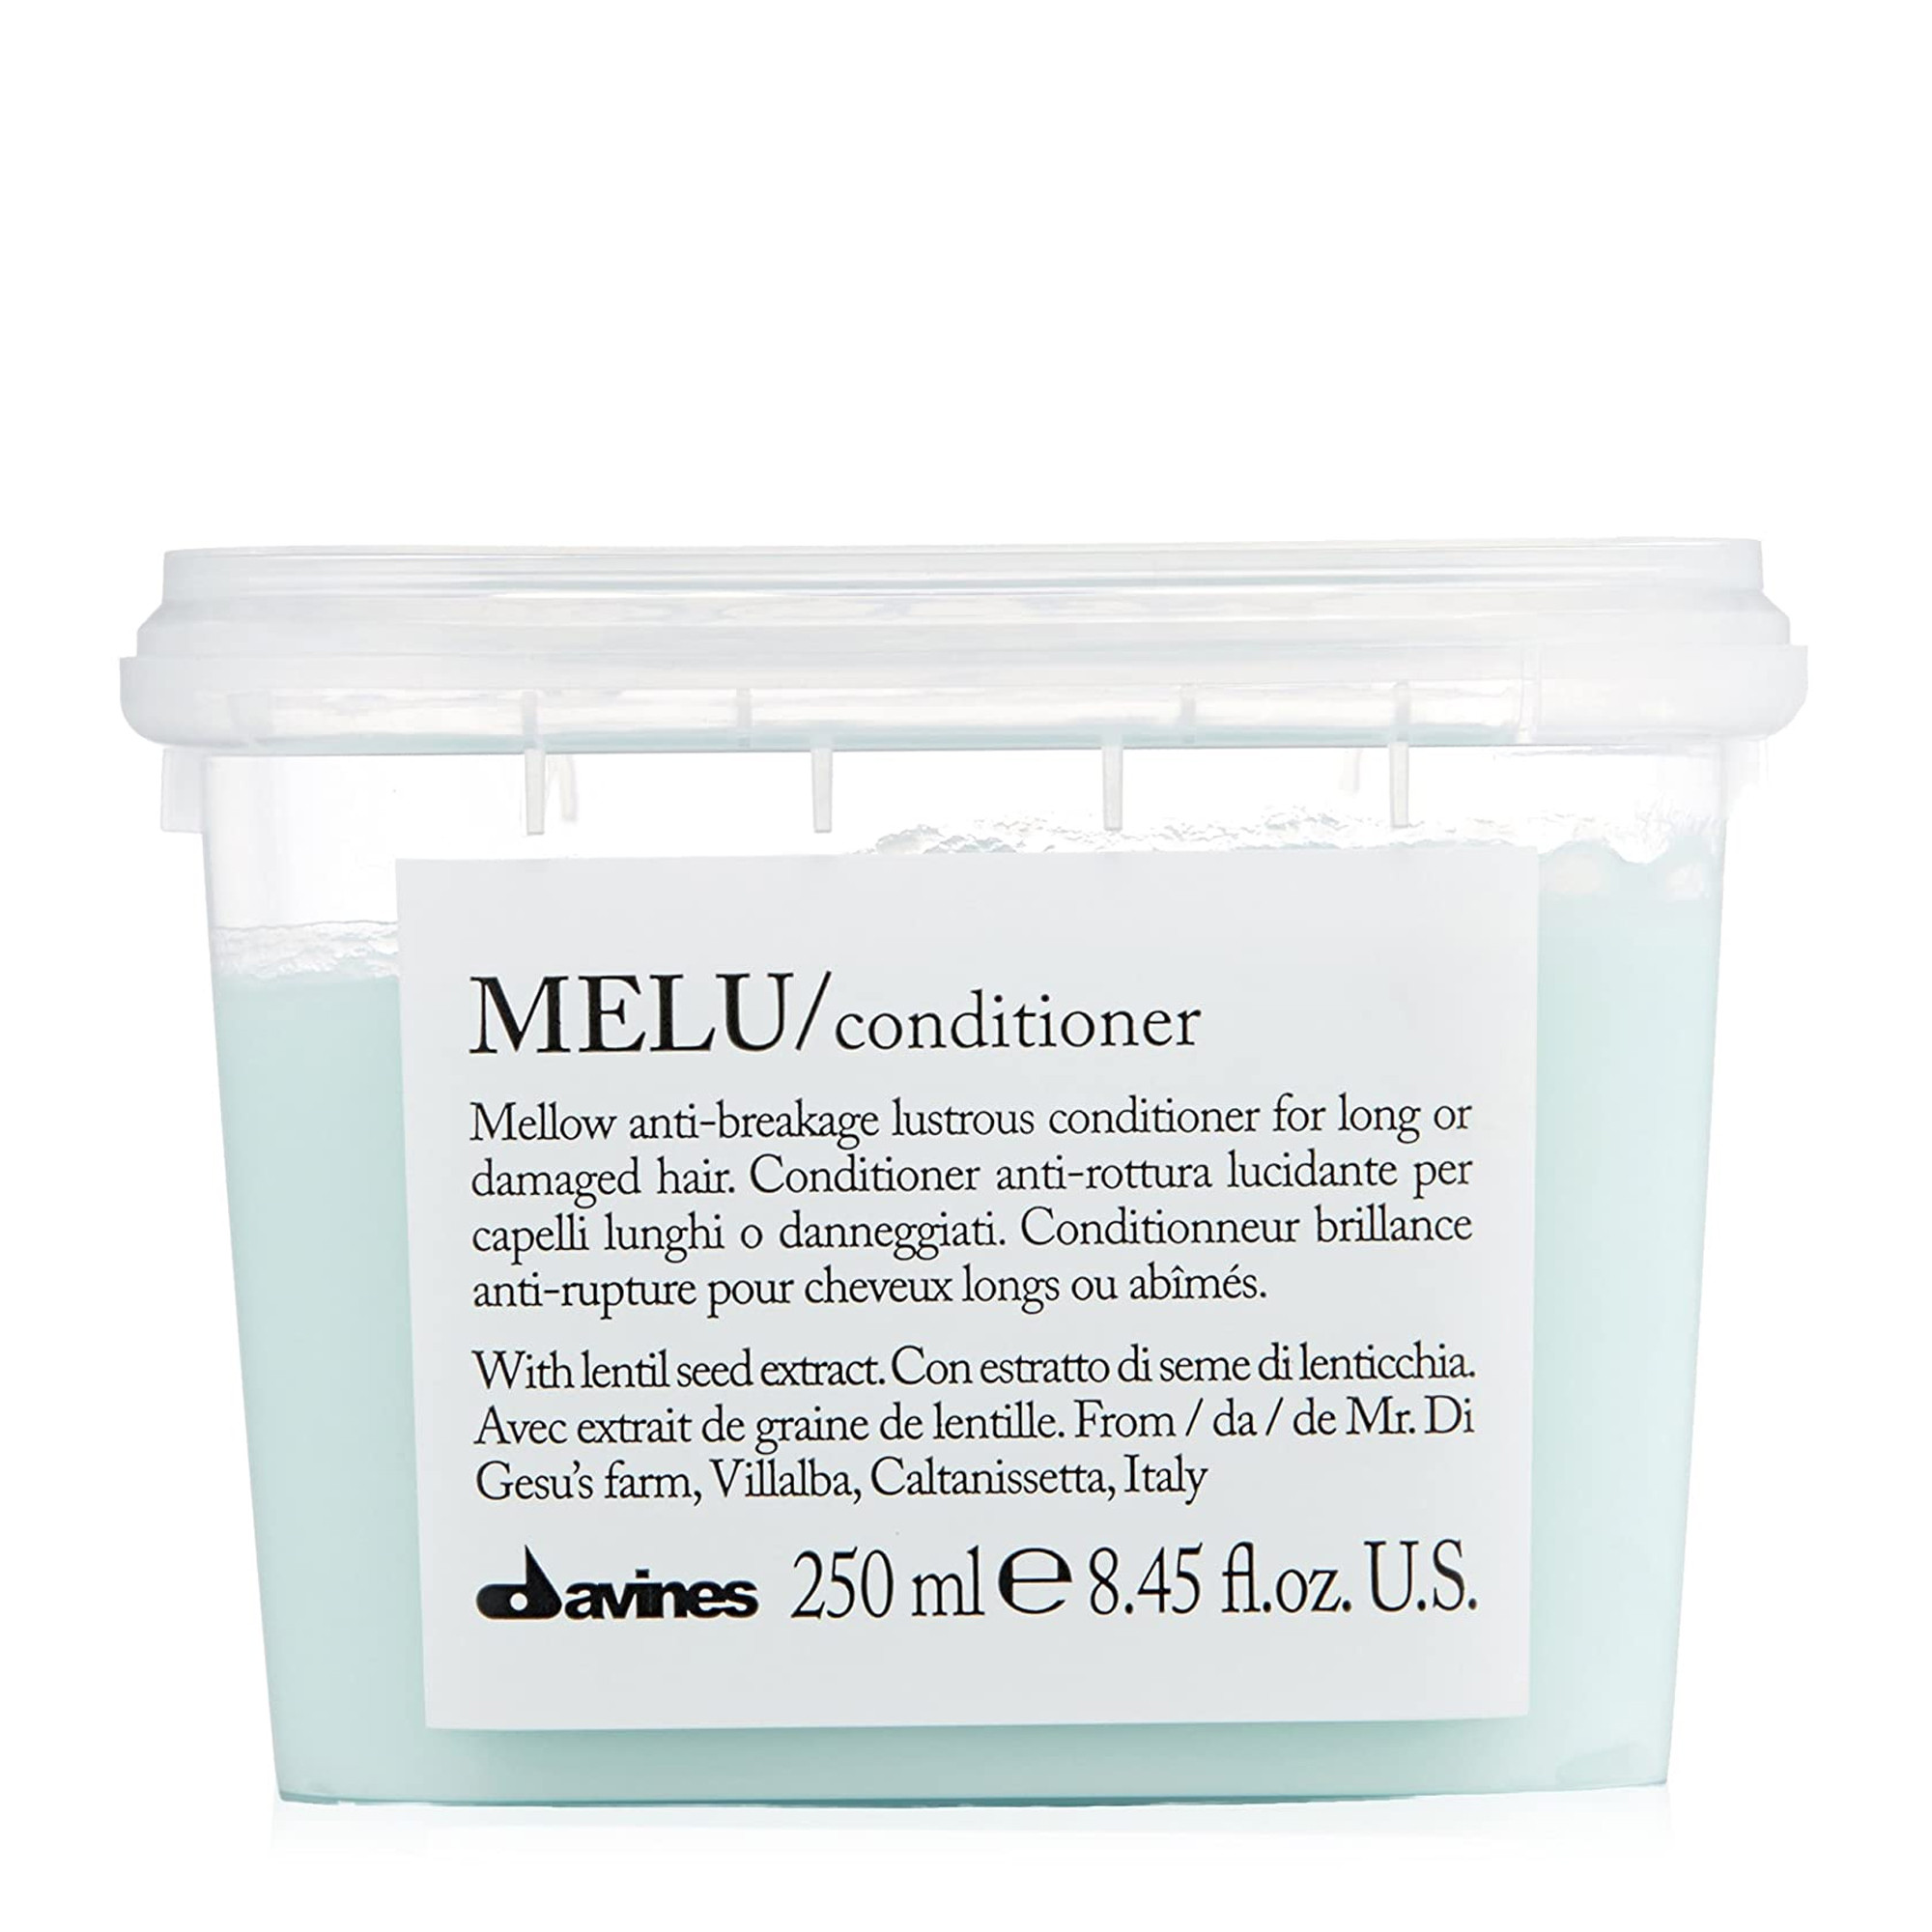 Davines Melu Conditioner Anti-Rottura Lucidante Кондиционер для ломких волос